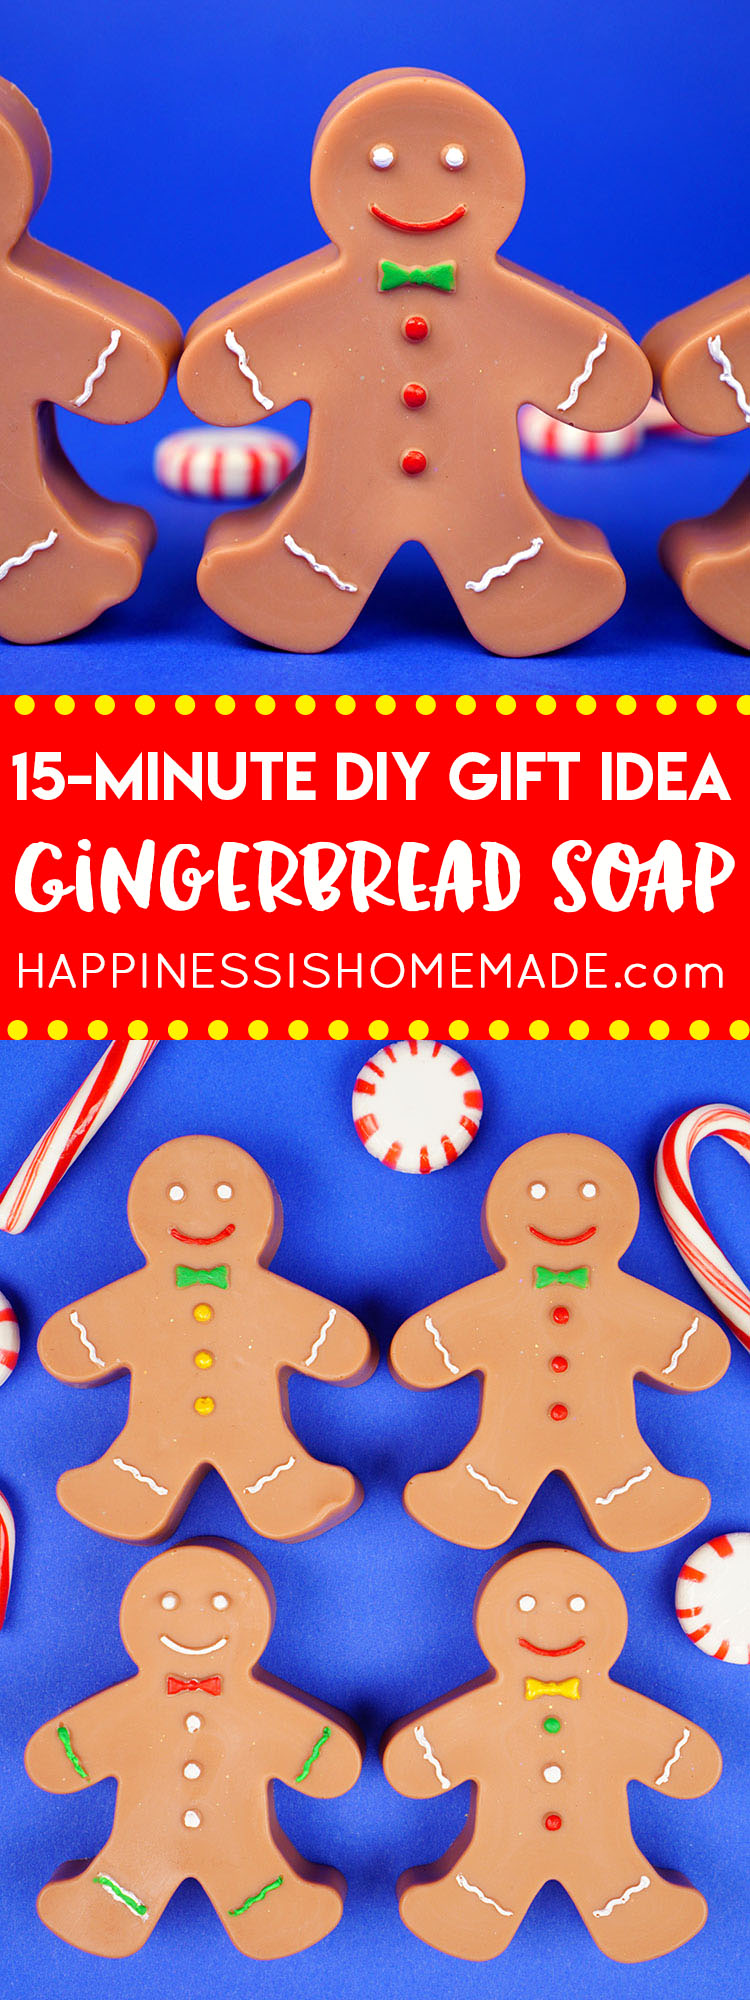 15 minute DIY gift idea gingerbread soap